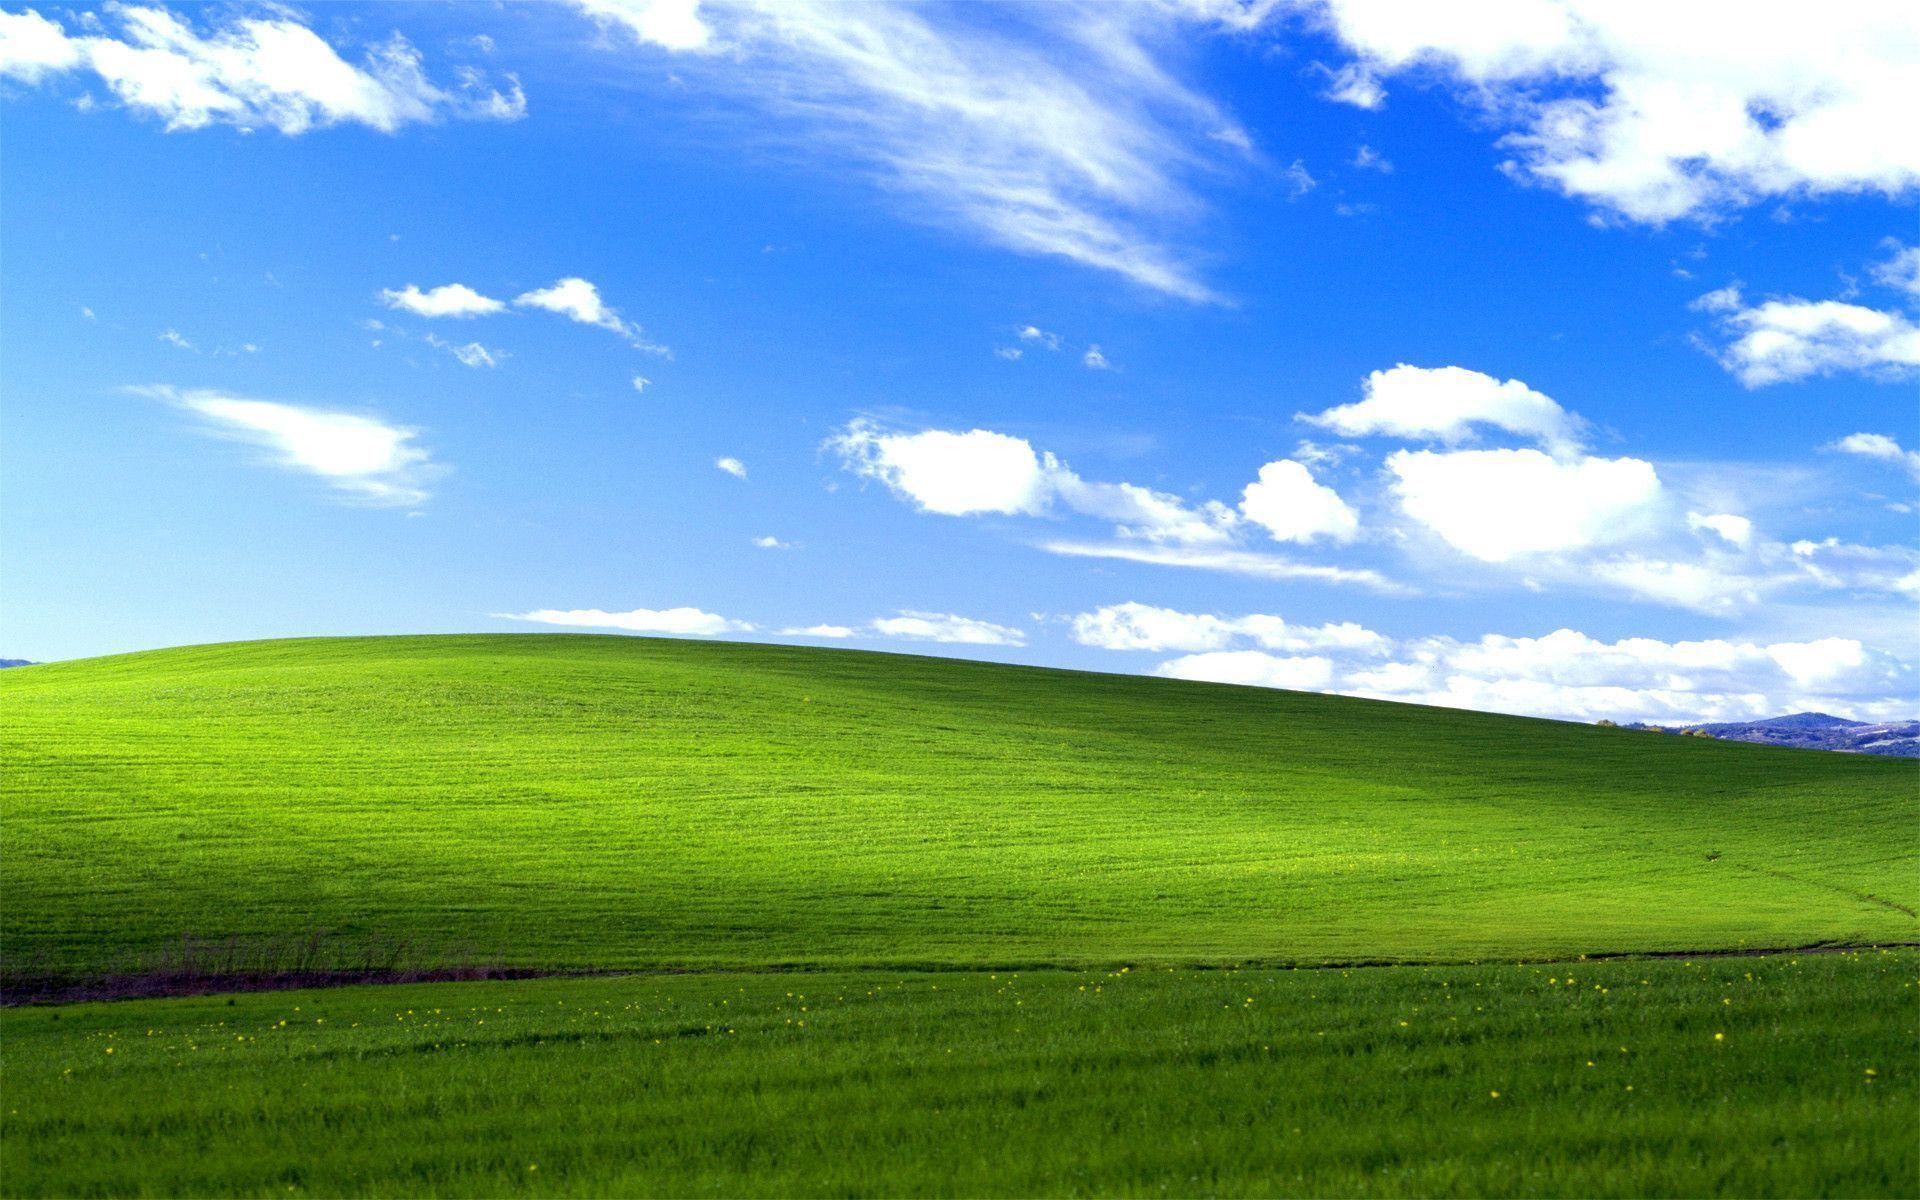 Windows XP Wallpapers HD - Cueva de fondo de pantalla